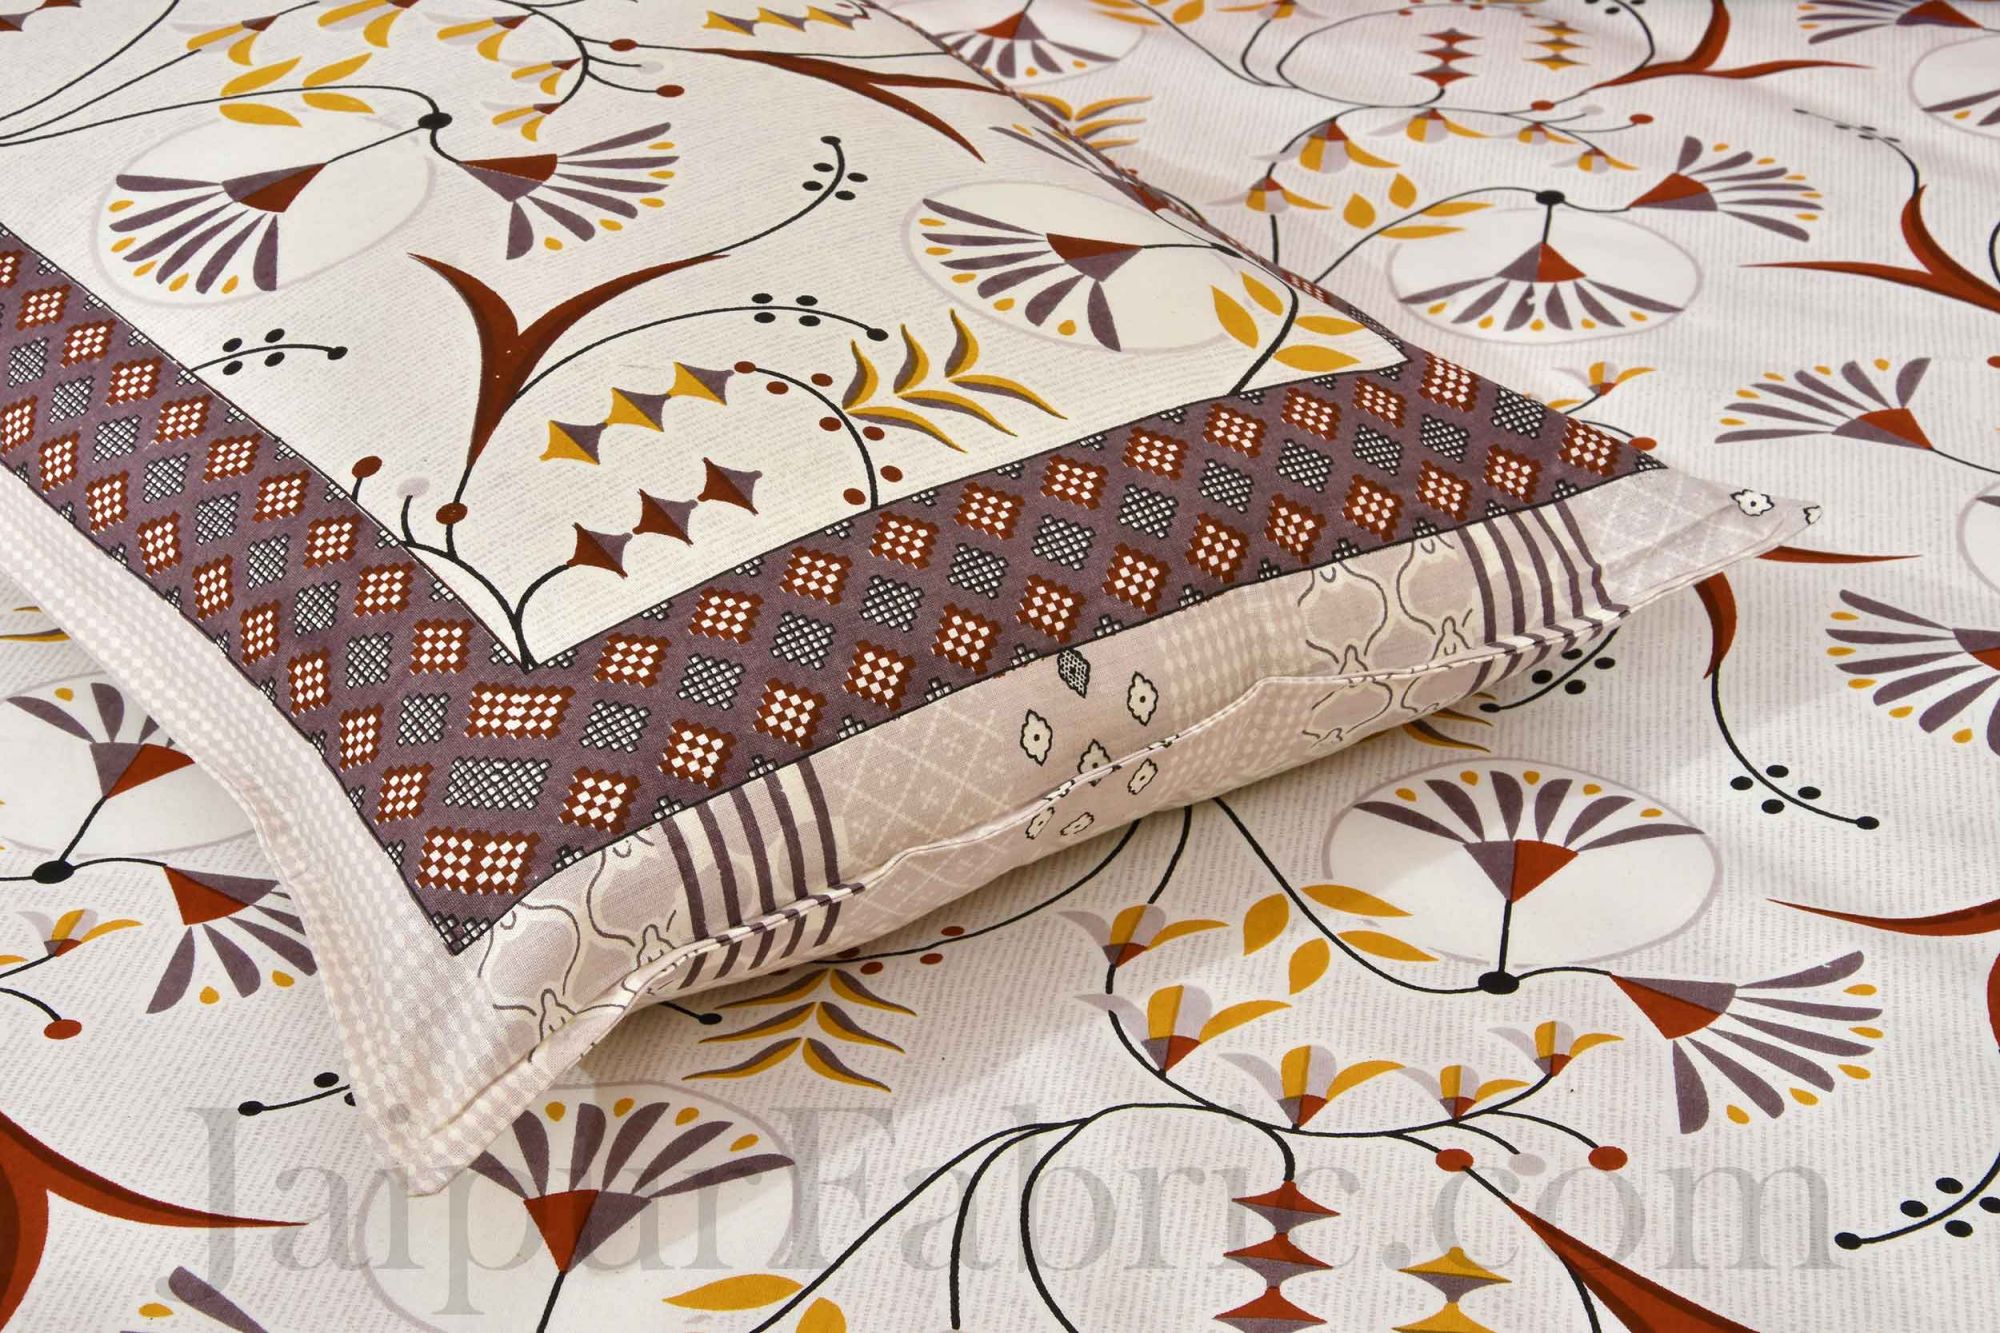 Maroon Floral Ethnic Cotton Jaipur Double Bedsheet